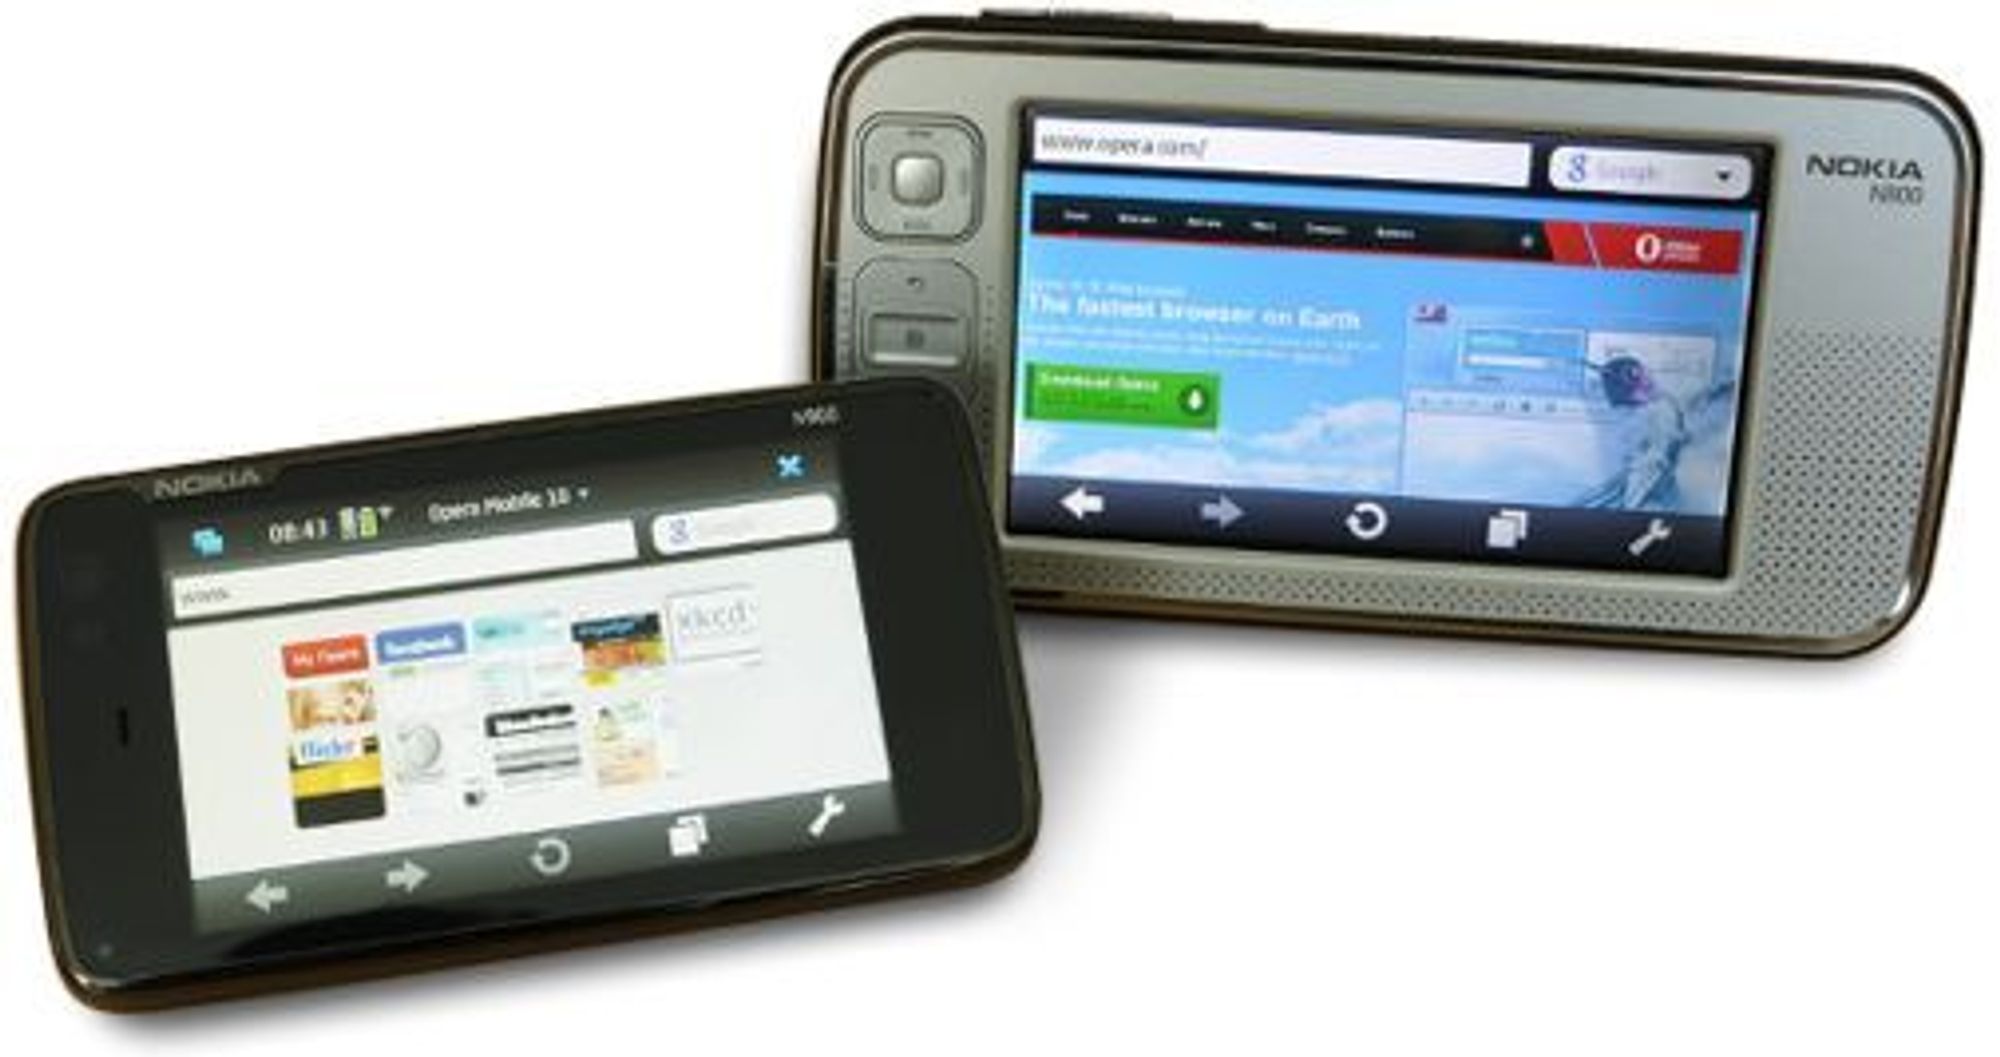 Opera Mobile 10 for Maemo på Nokia N900 og N800